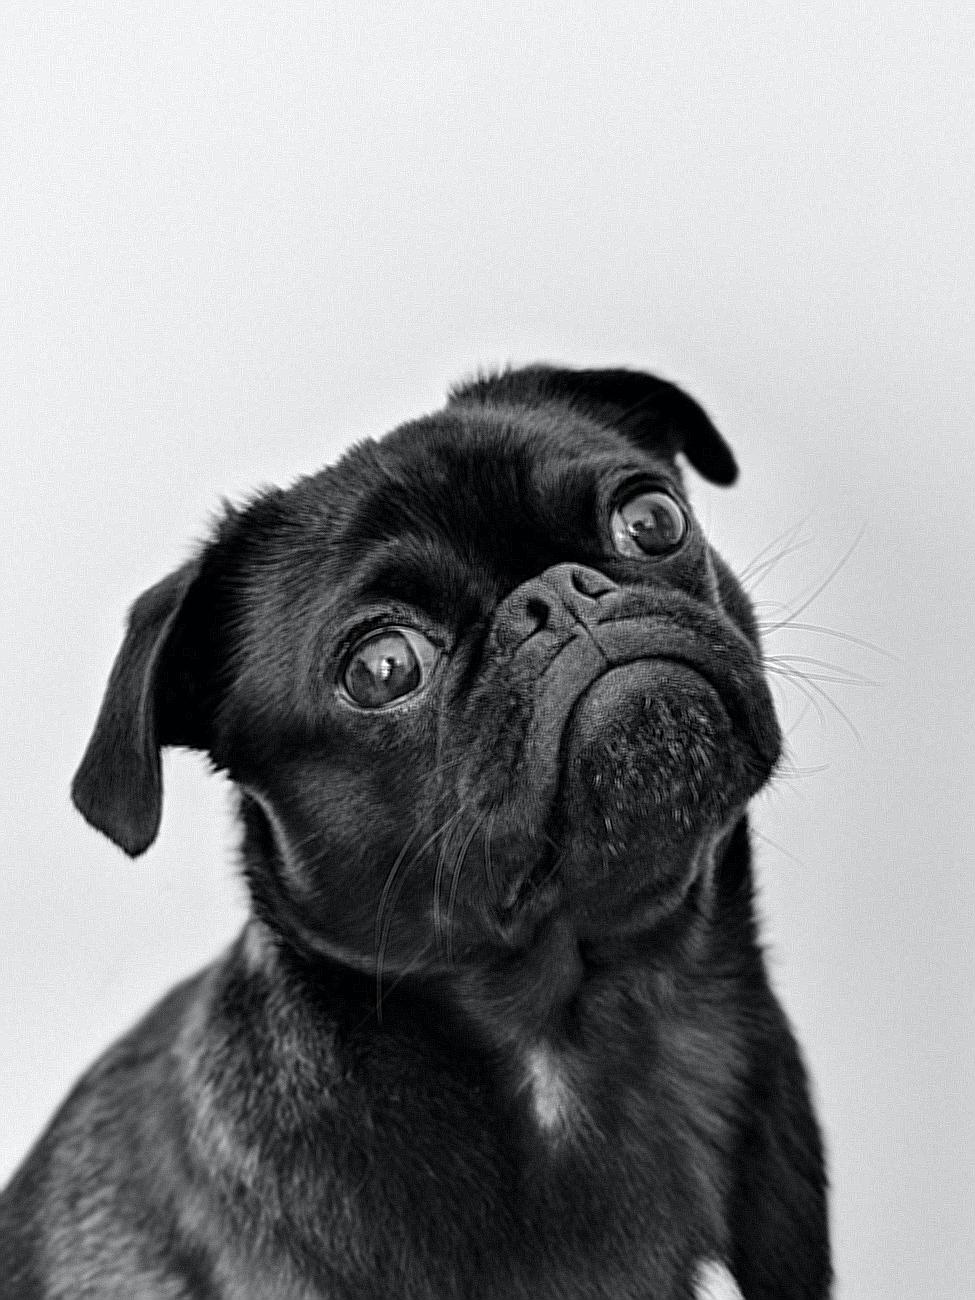 Portrait Photo of an Adult Black Pug